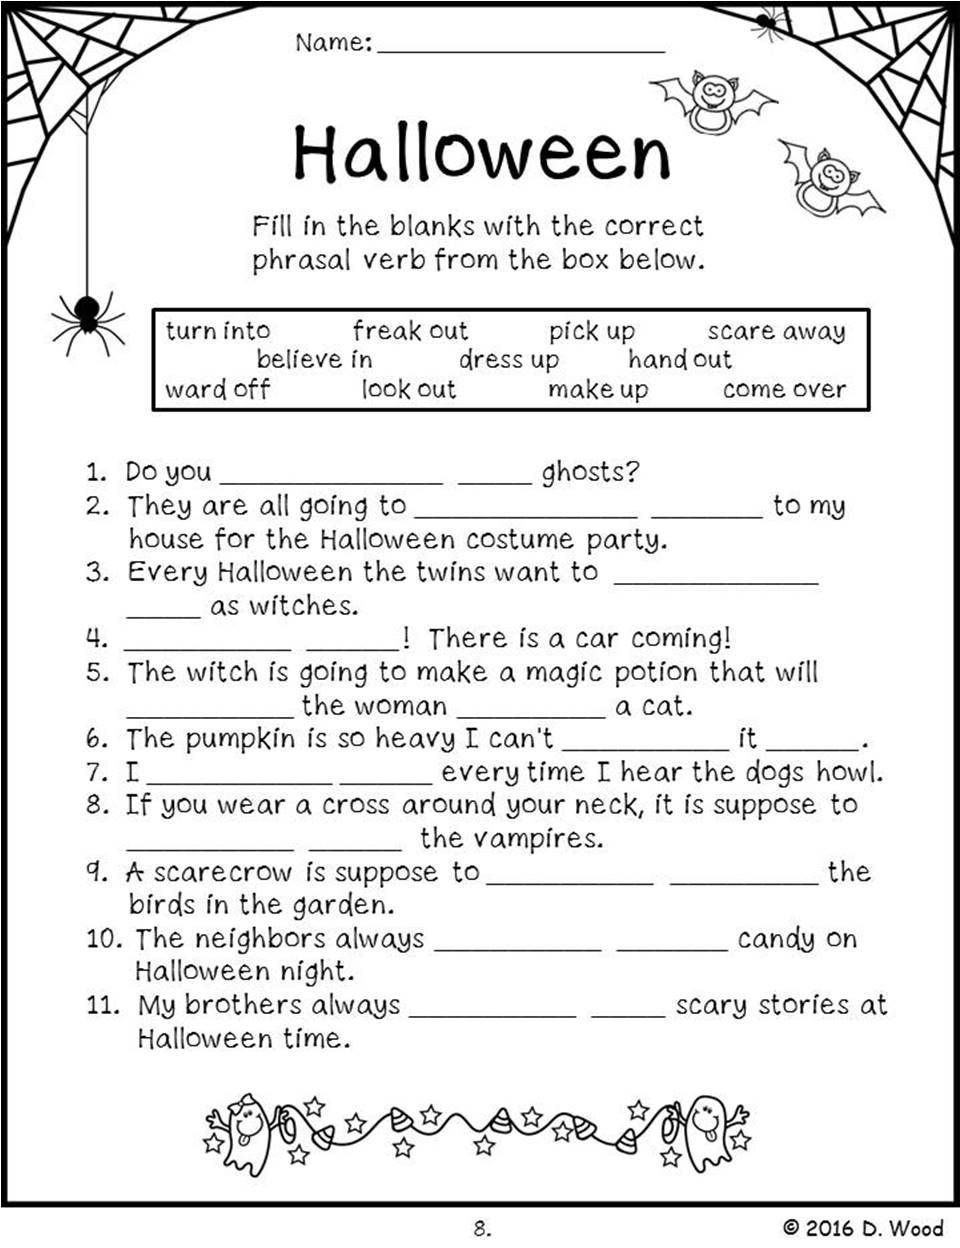 Halloween Worksheets Reading Comprehension Halloween Reading